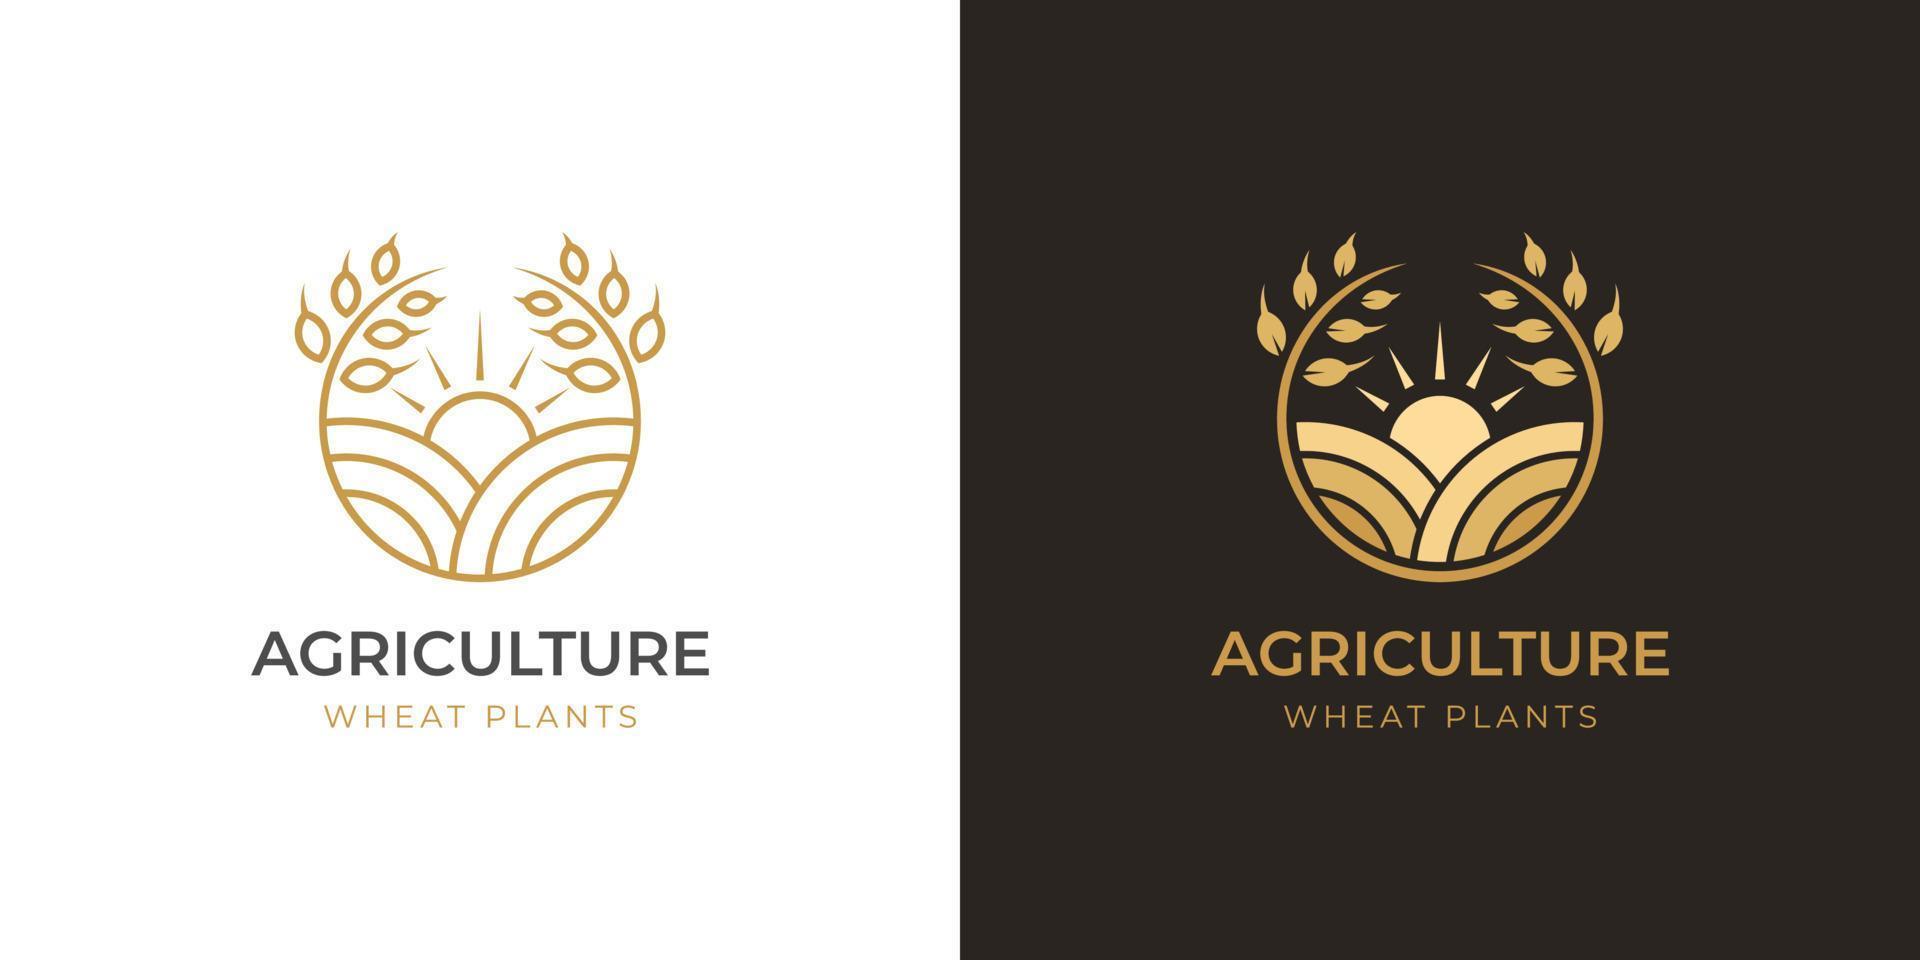 Agriculture farm logo design with circle gold wheat logo symbol design, rice farming logo template two versions vector